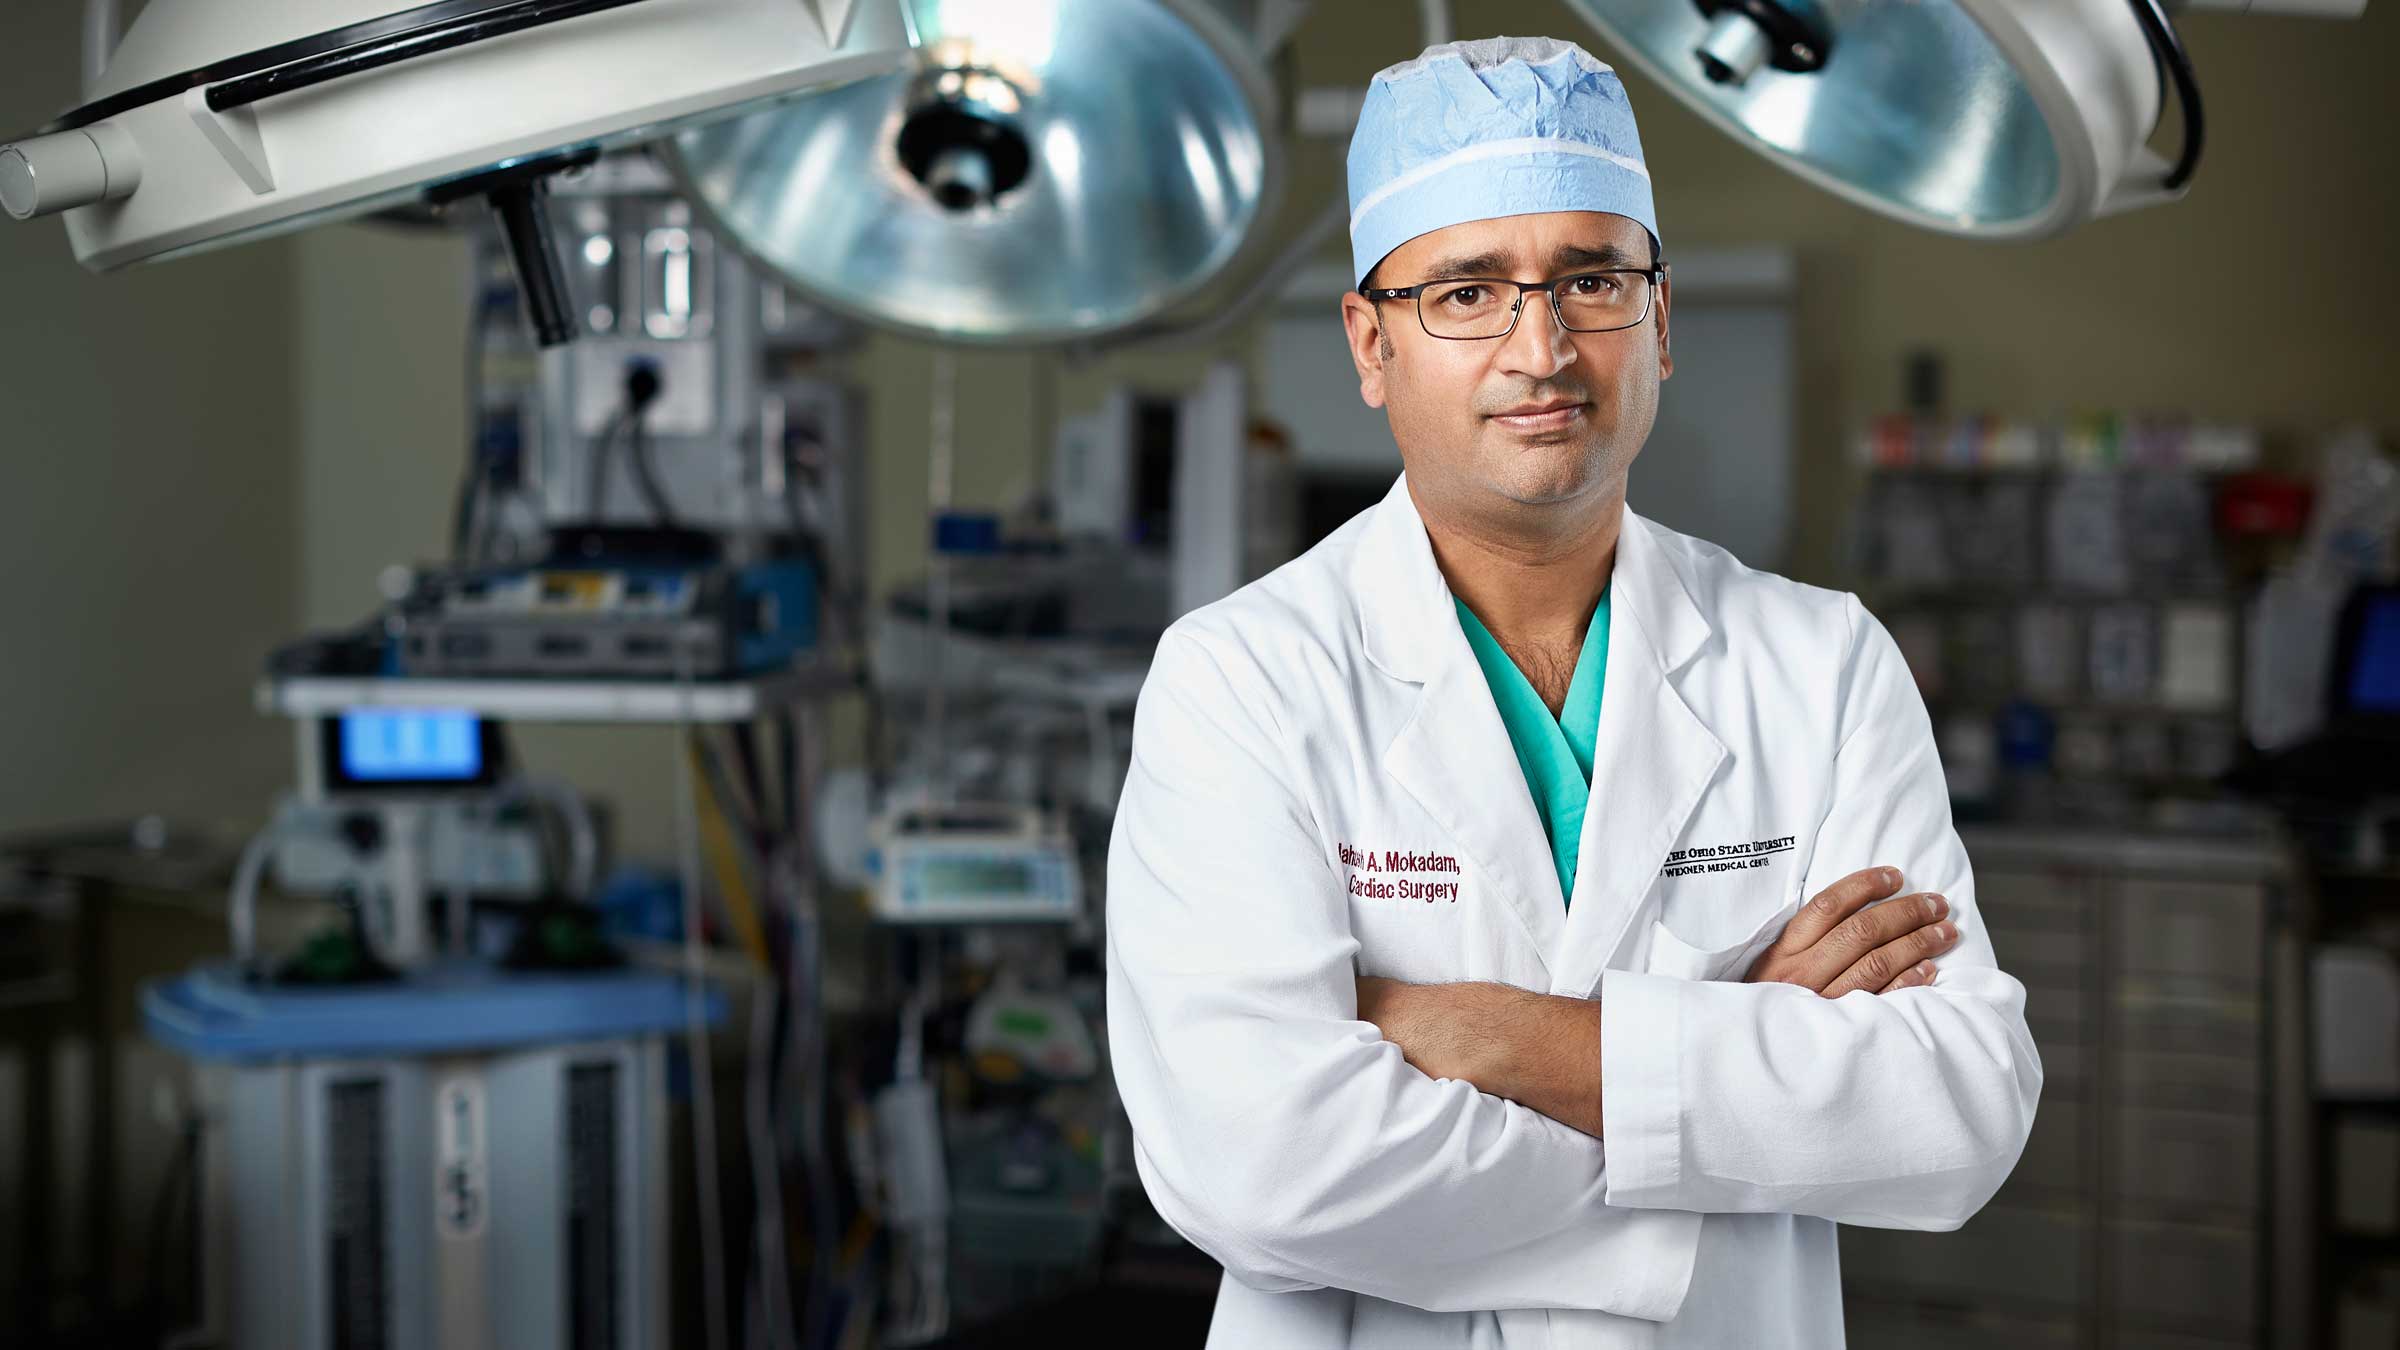 Cardiac surgeon Nahush Mokadam, MD, standing in the surgical suite